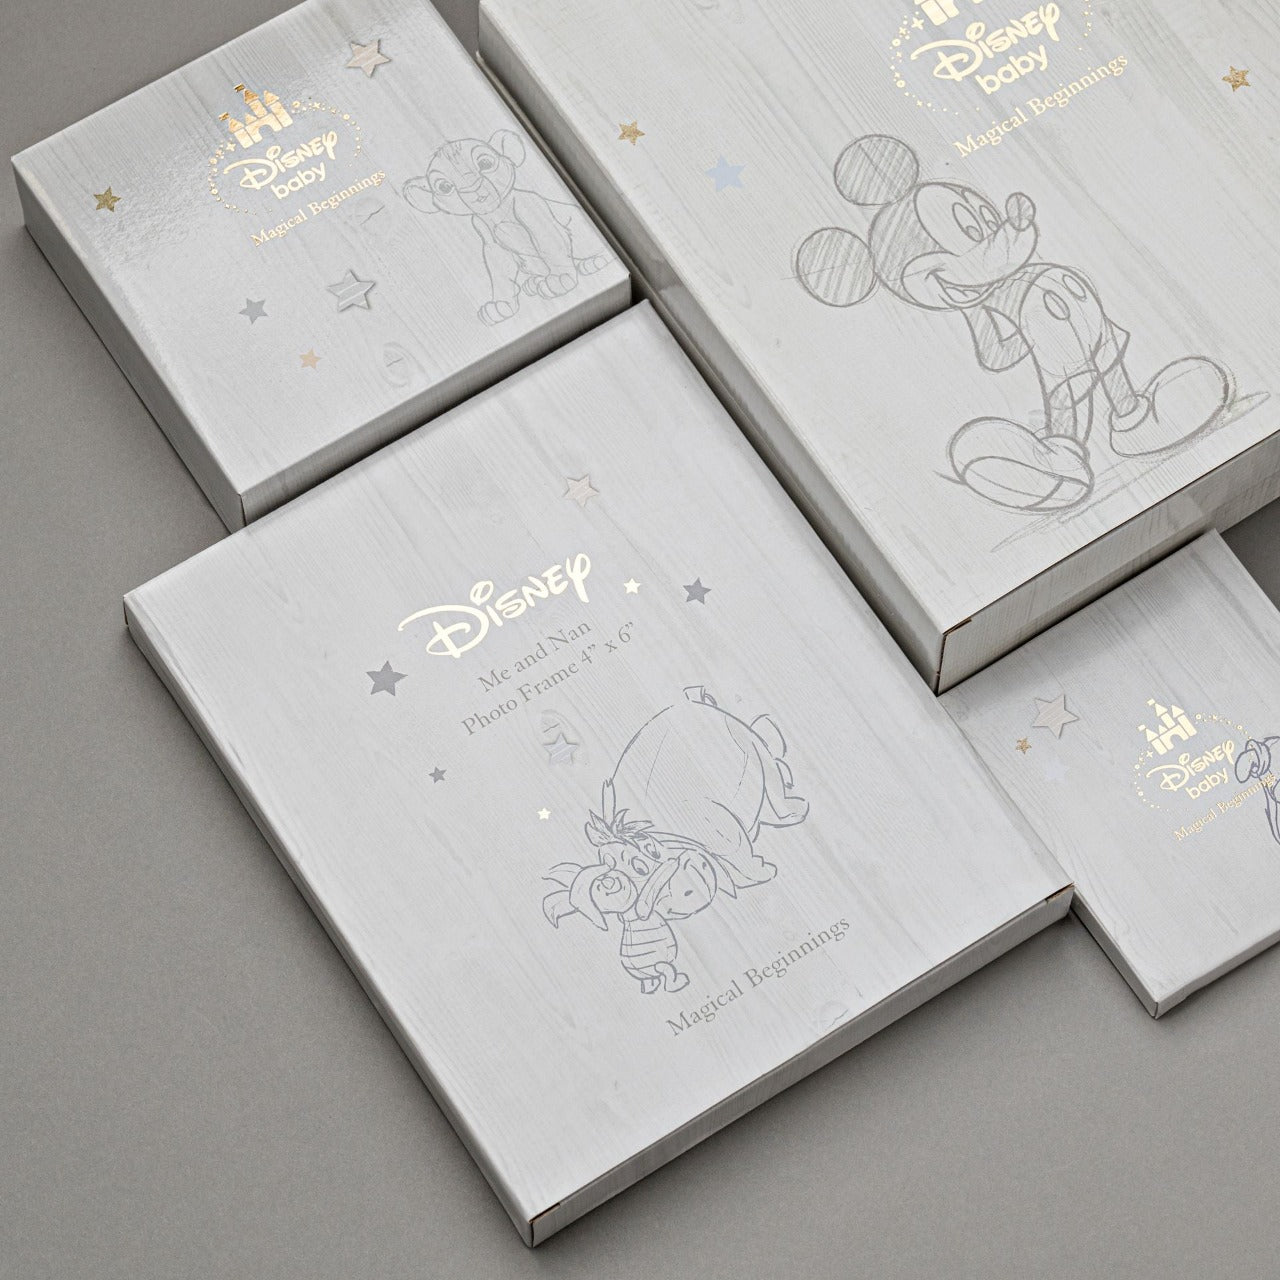  Disney Photo Album Winnie The Pooh Magical Beginnings